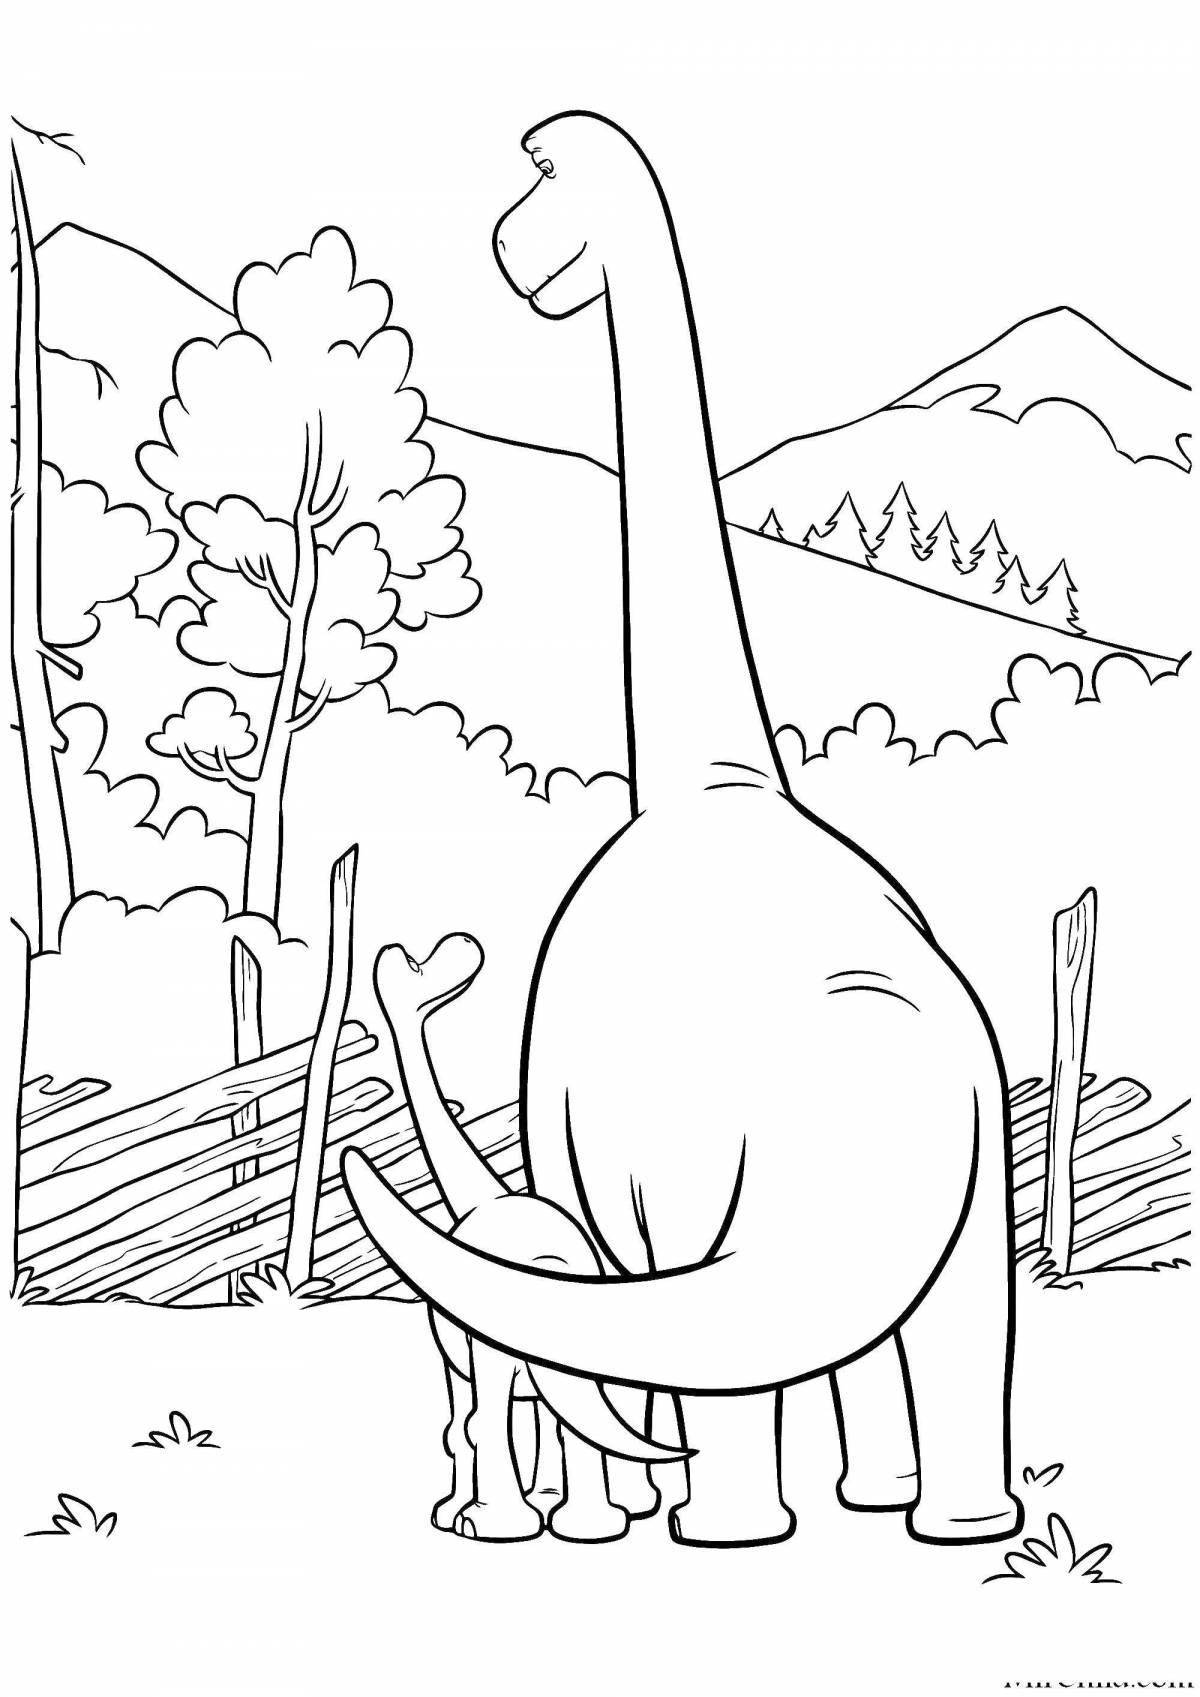 Glorious Apatosaurus coloring page